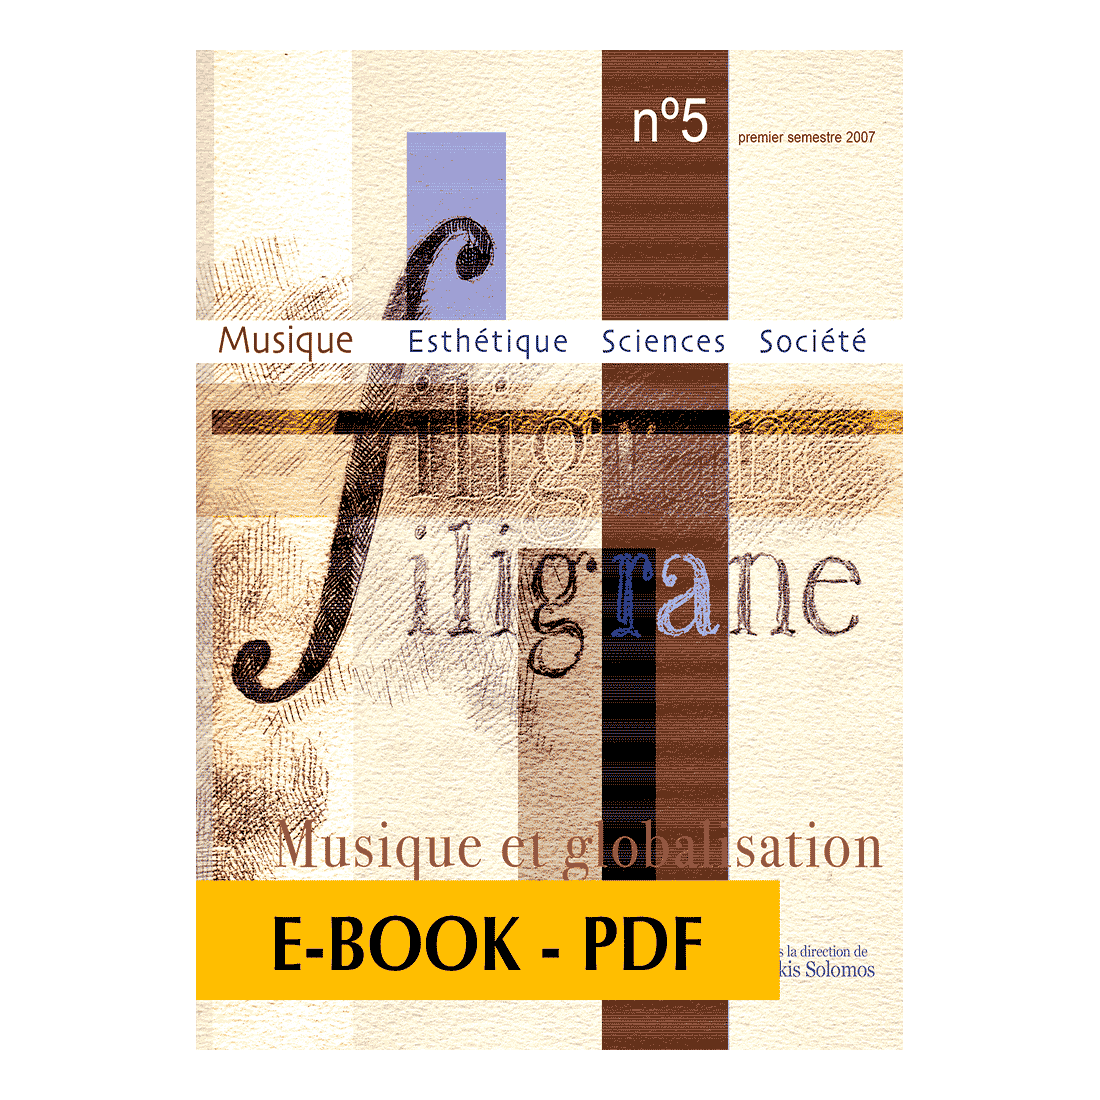 Revue Filigrane n°5 - Musique et globalisation - E-book PDF